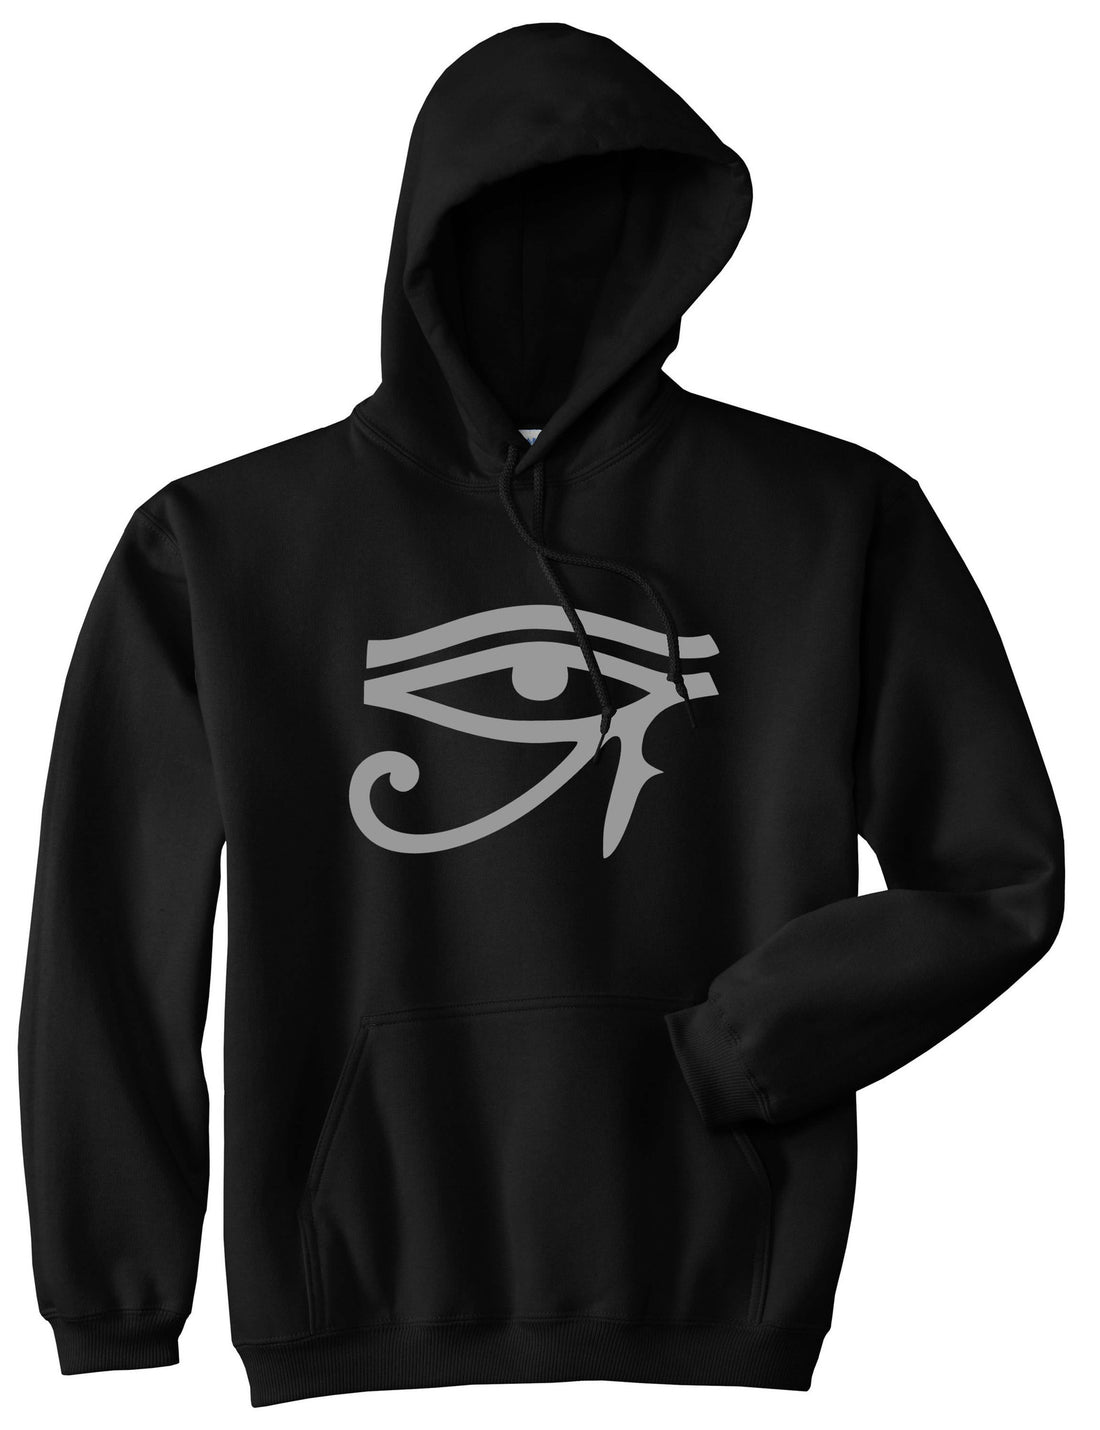 Eye of Horus Egyptian Pullover Hoodie Hoody by Kings Of NY